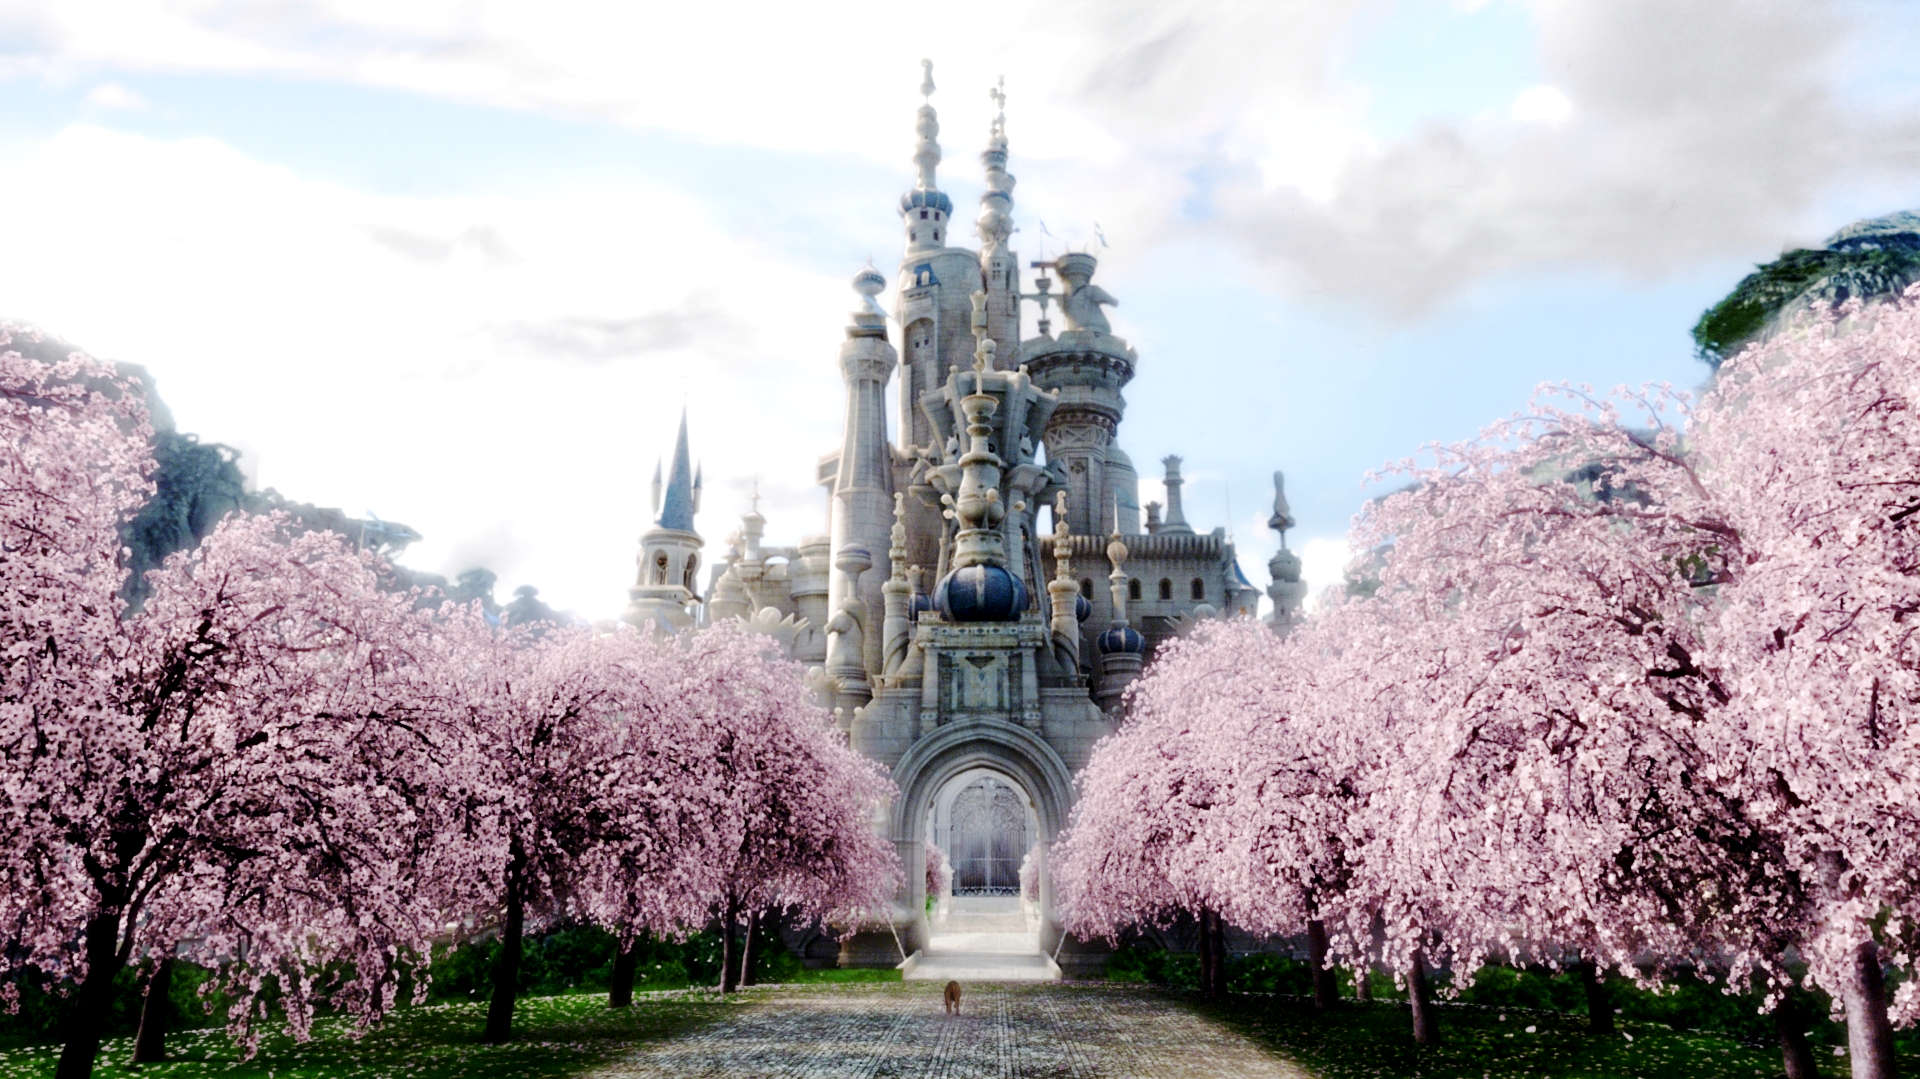 A scene from Walt Disney Pictures' Alice in Wonderland (2010)